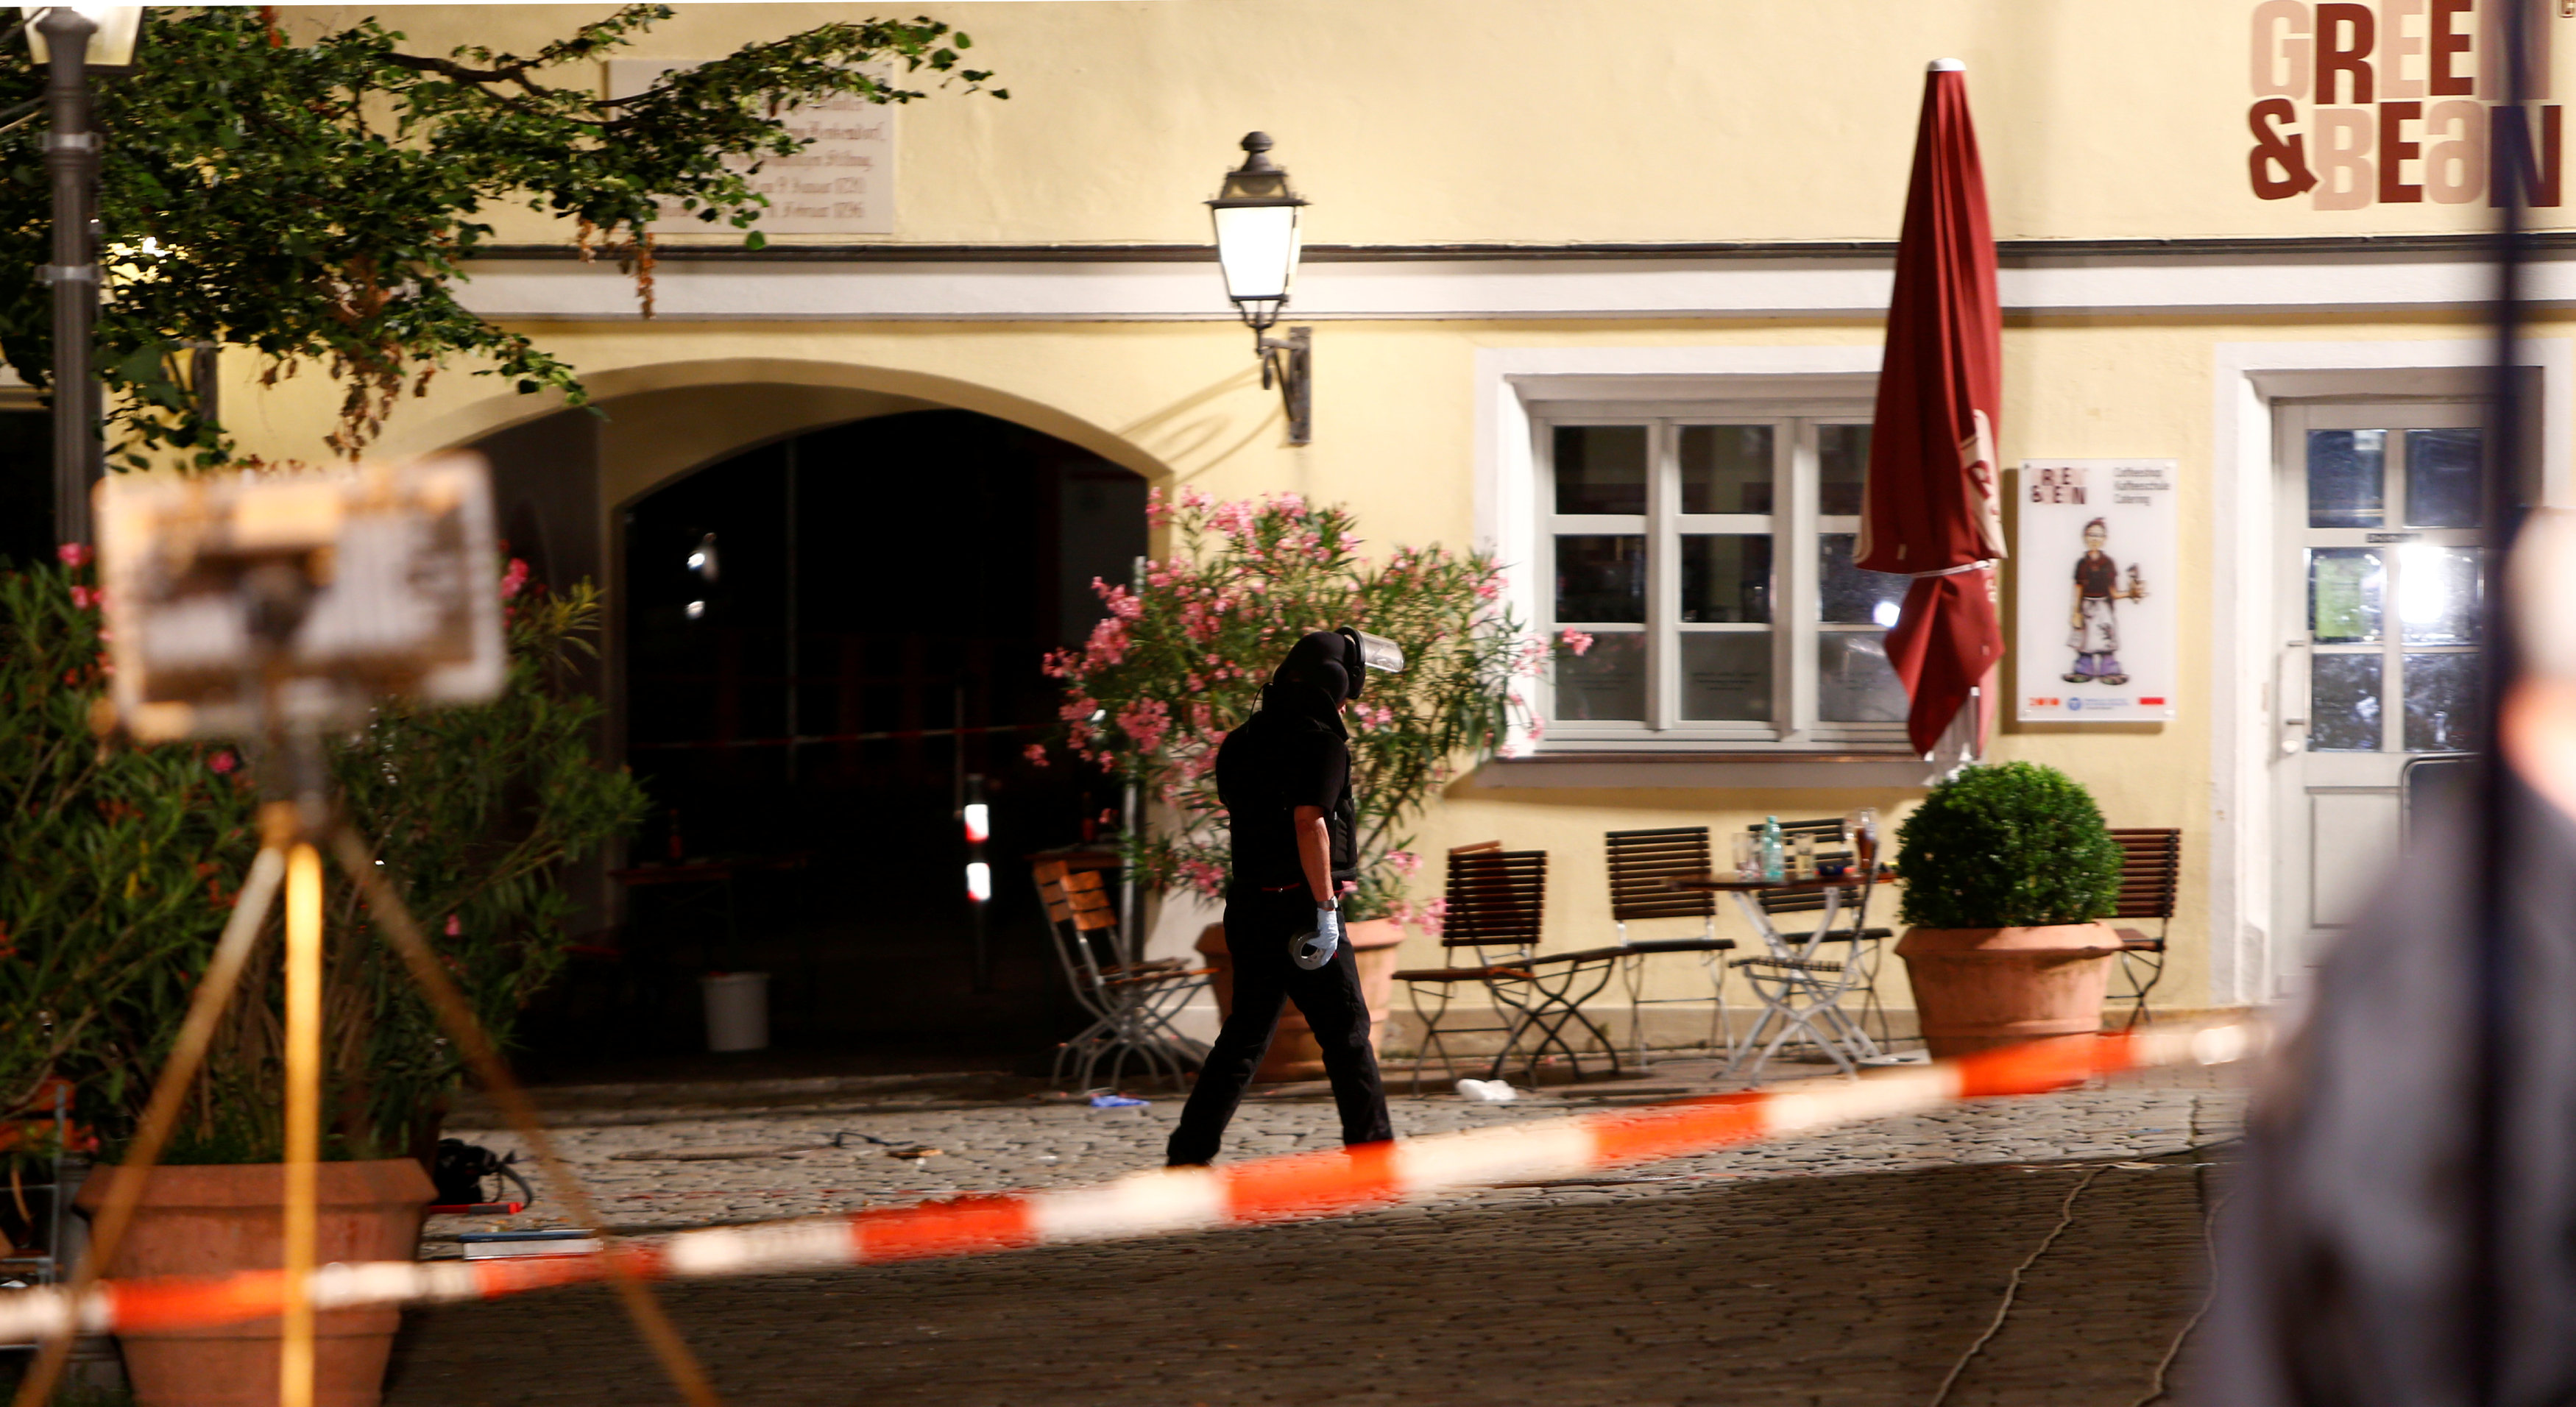 Nεκρός ο 22 χρονος σύρος βομβιστής του εστιατορίου στη Γερμανία – 12 ακόμη τραυματίες ο αιματηρός απολογισμός